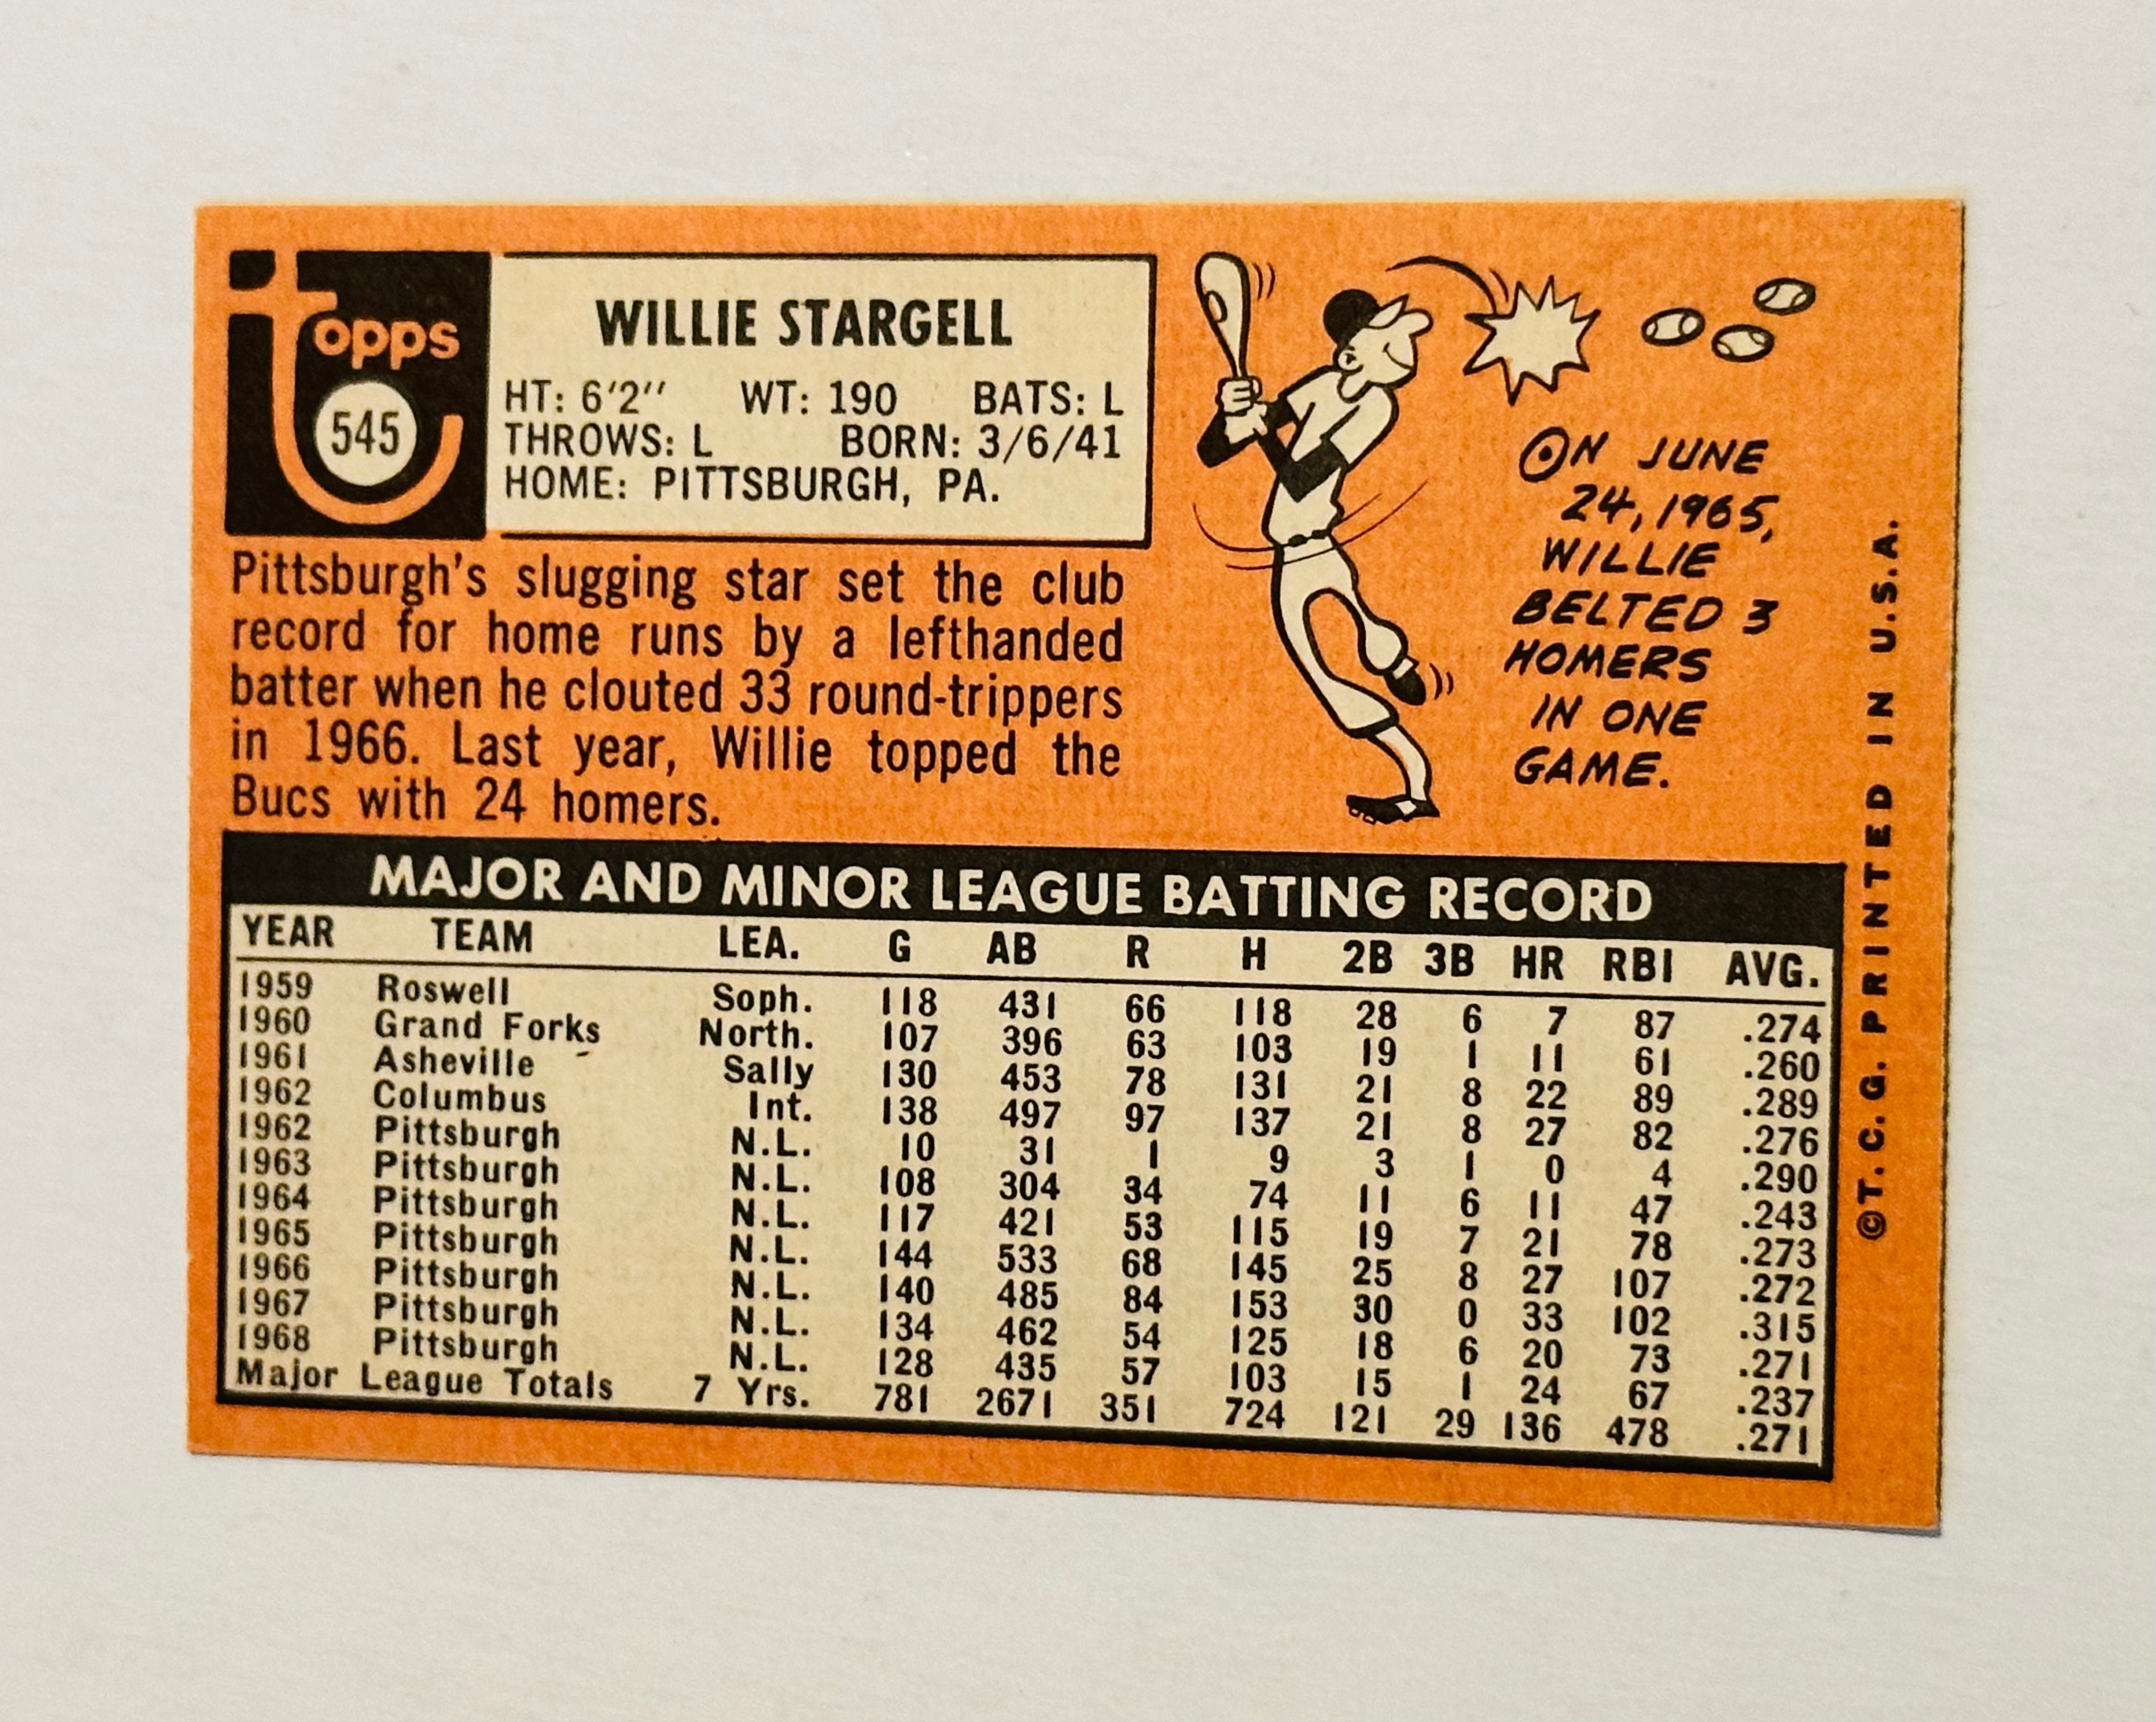 1969 Willie Stargell high grade ex-nm condition baseball card